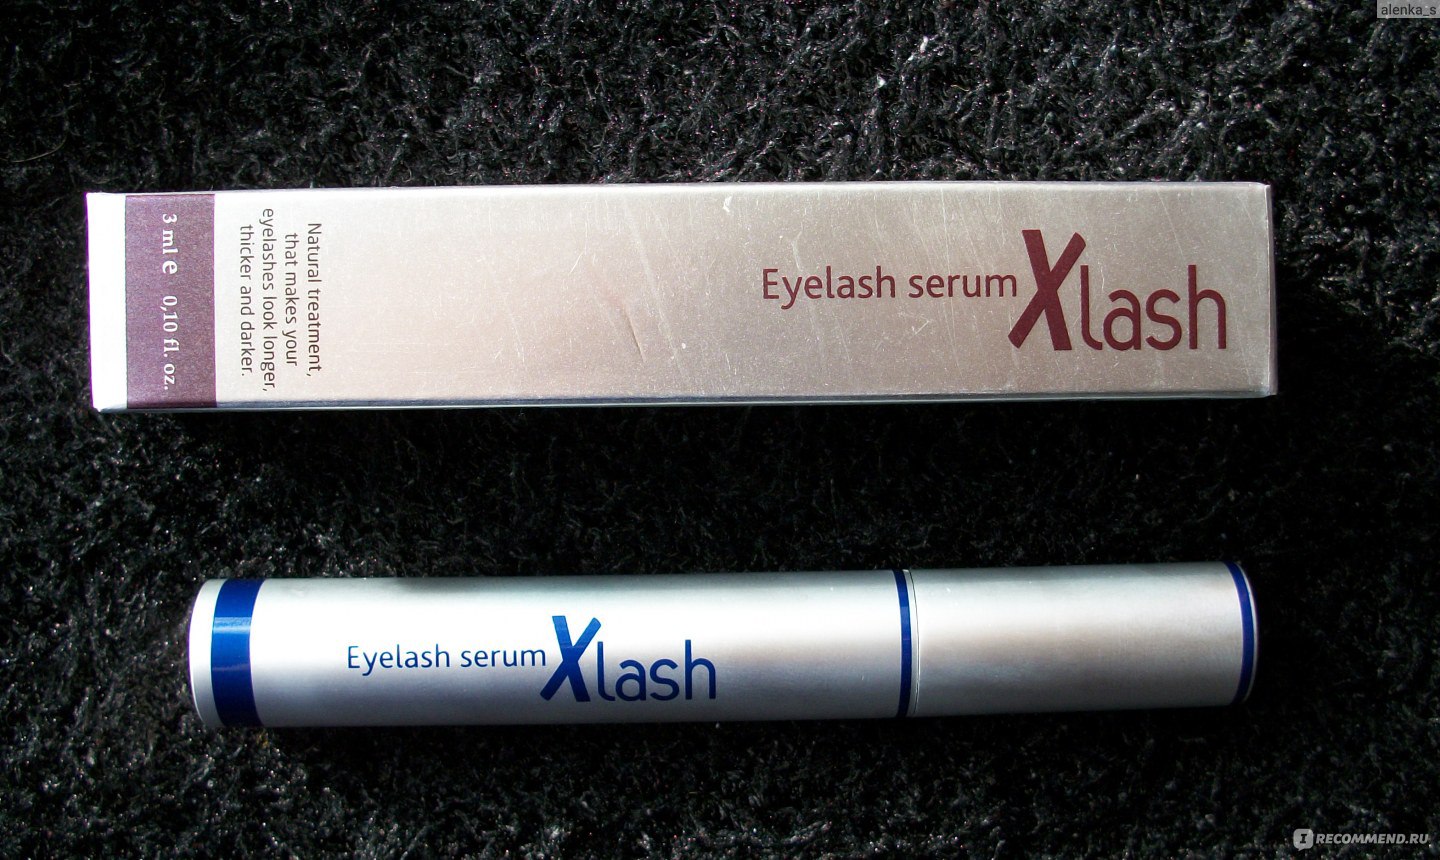 Eyelash serum xlash. Сыворотка для ресниц Xlash Eyelash Serum. Xlash. Xlash Cosmetics Eyelash Serum отзывы. Xlash сыворотка отзывы.